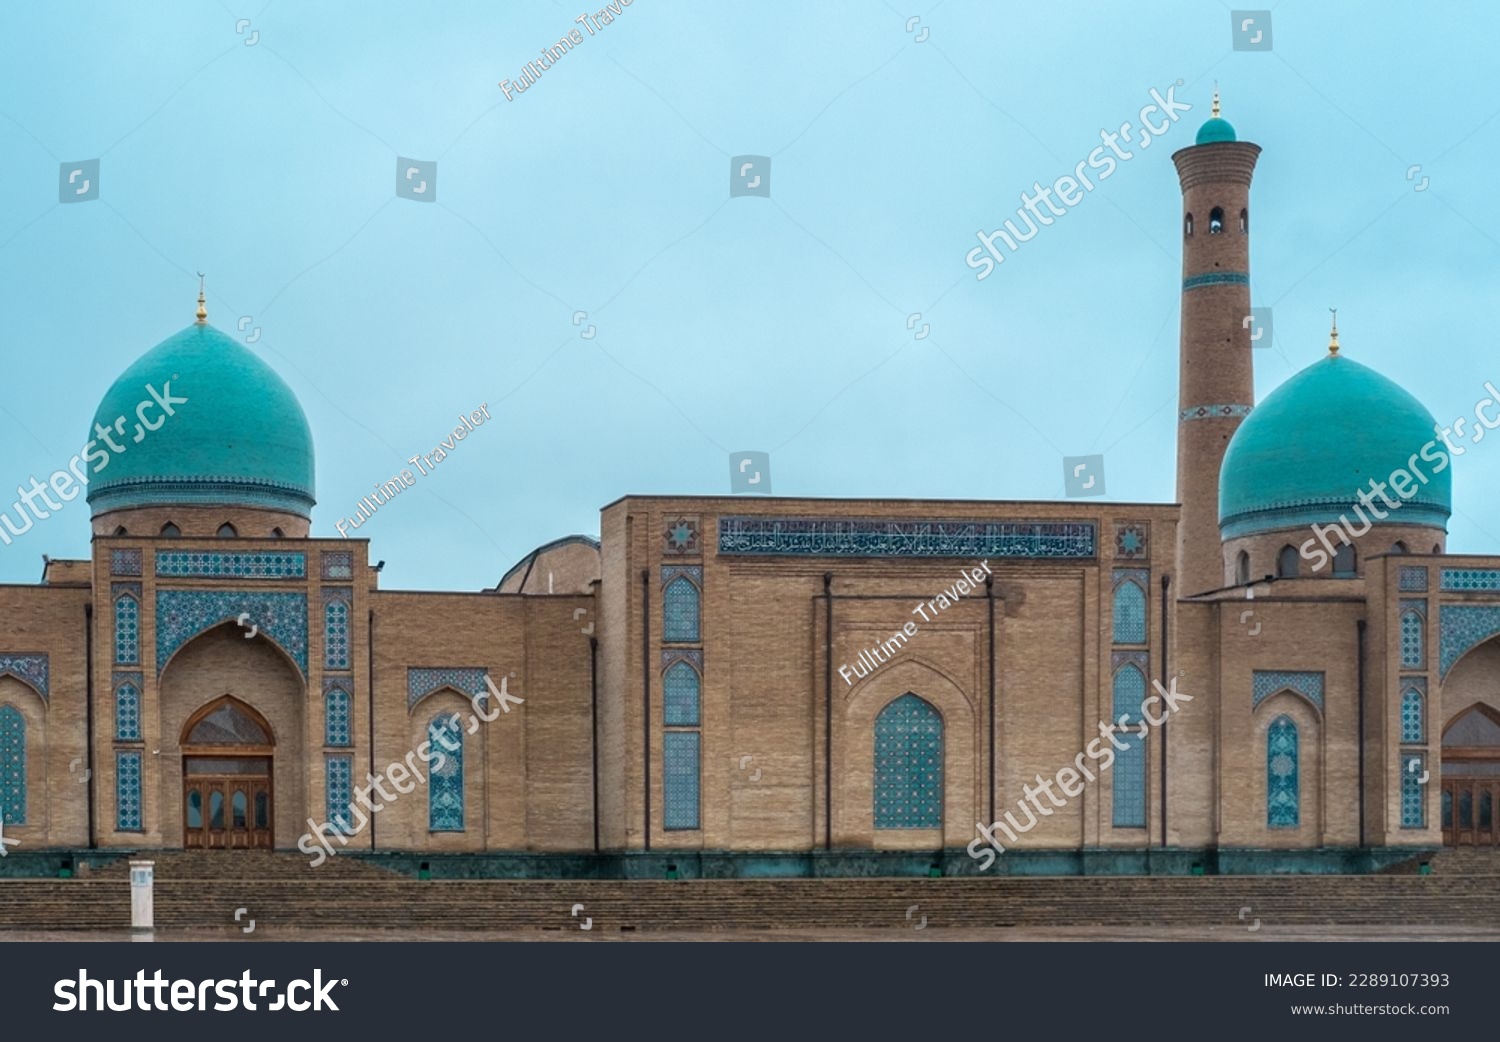 Beautiful Uzbekistan Tashkent classic mosaic photo, view of Barak Khan Madrasah, Hast Imam Square (Hazrati Imam) is a religious center of Tashkent. #2289107393